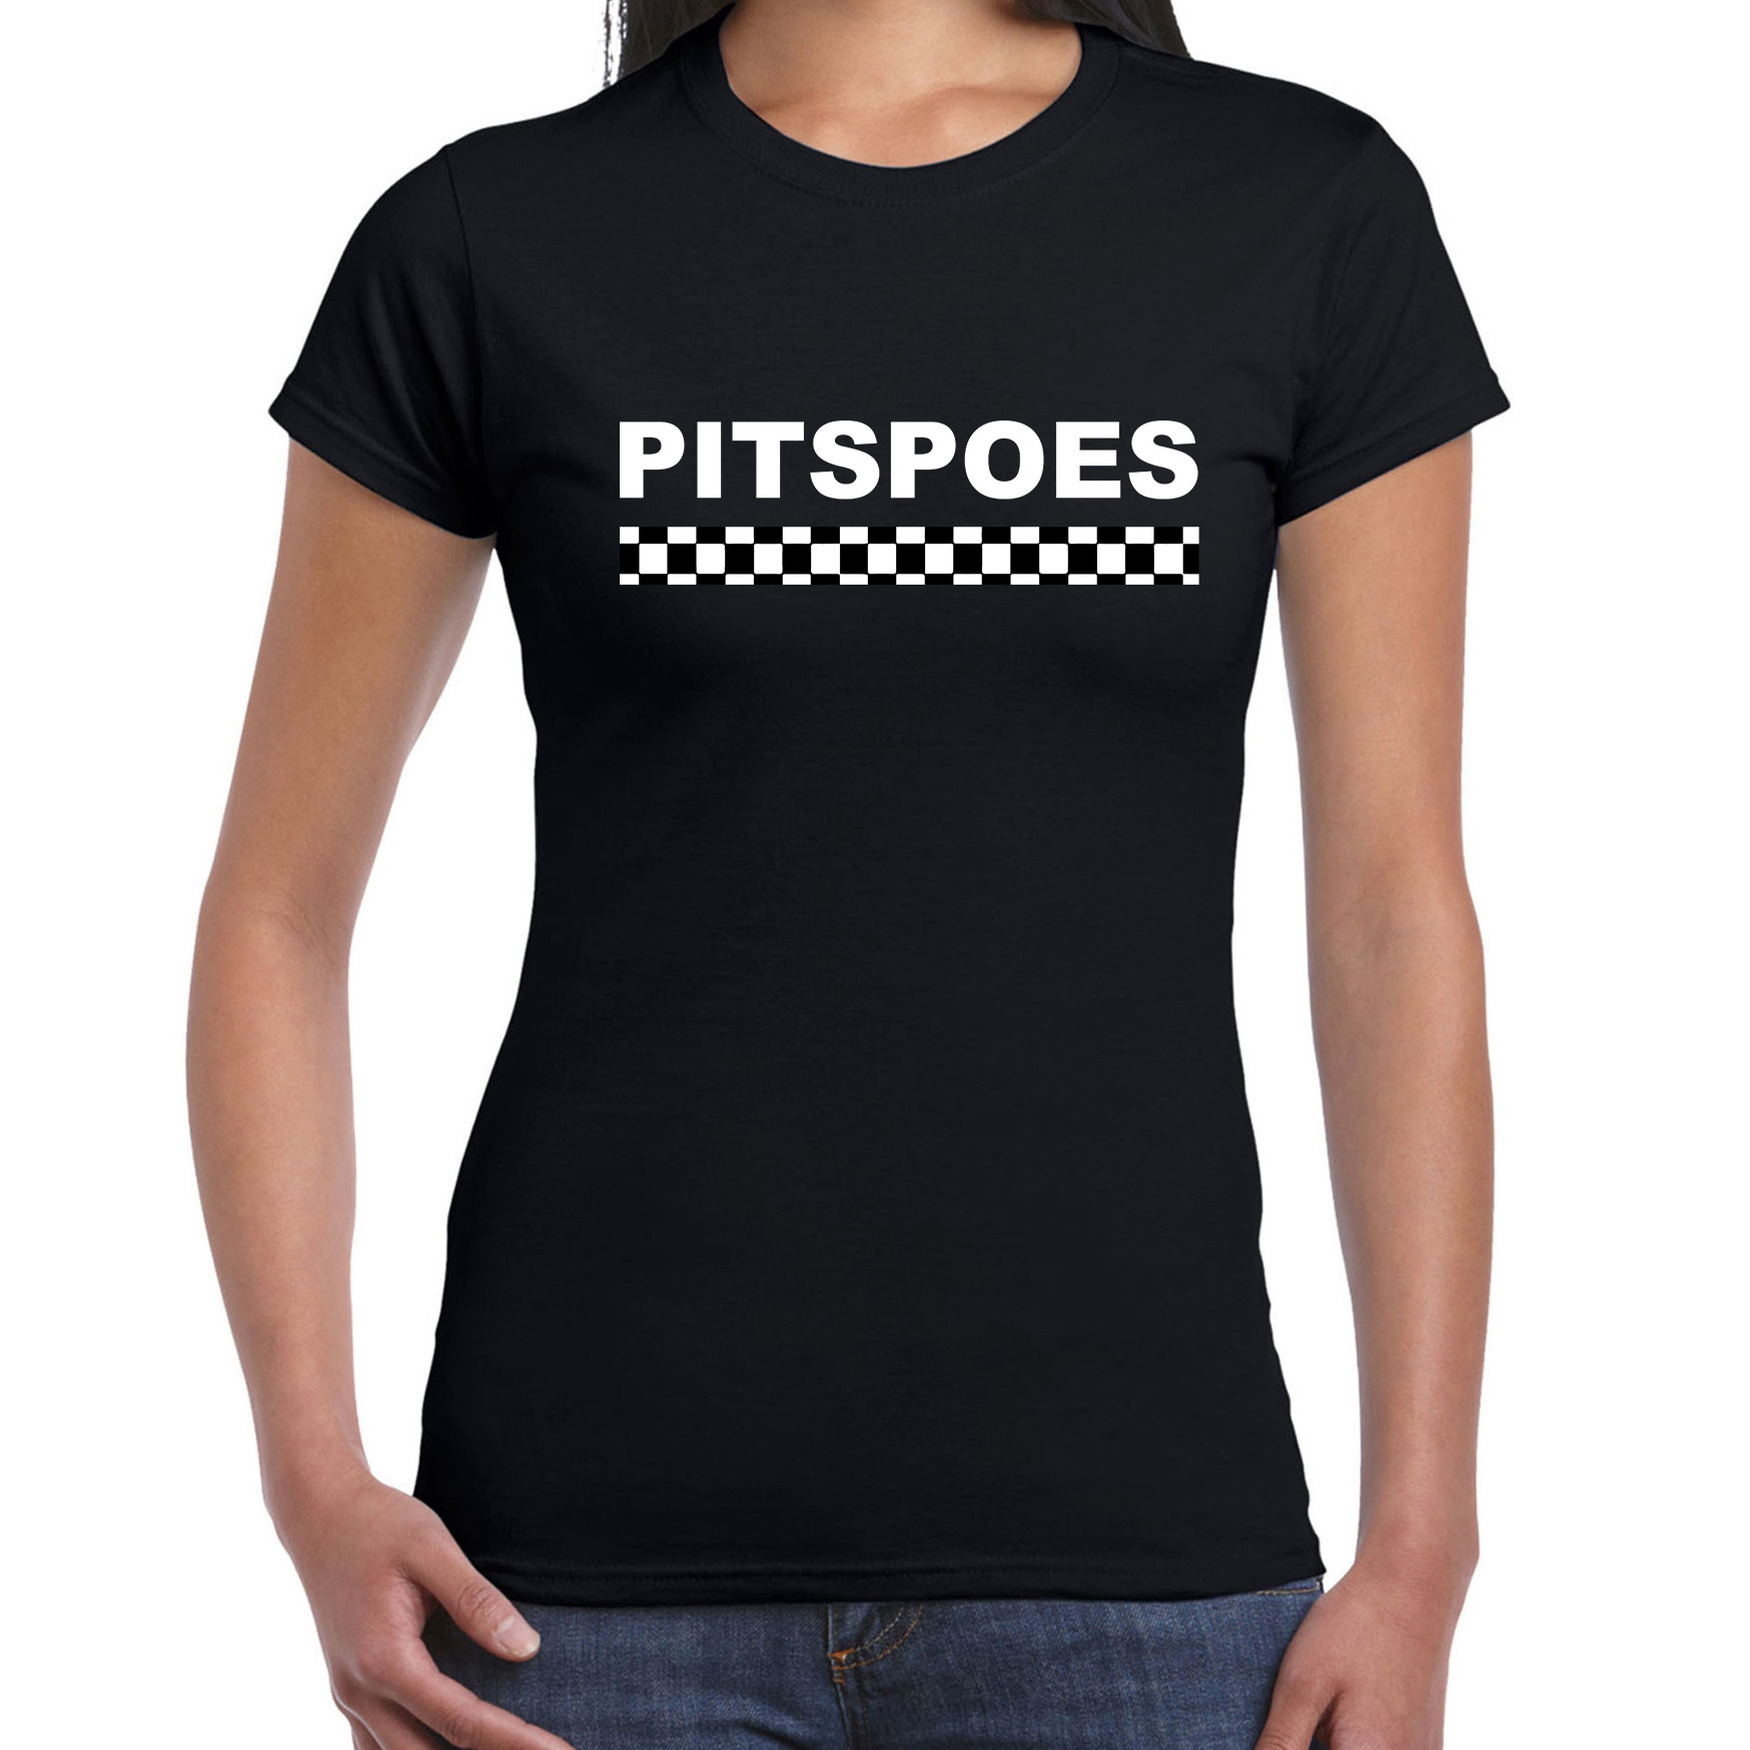 Pitspoes coureur supporter finish vlag t shirt zwart voor dames race autosport motorsport thema race supporter met finish vlag